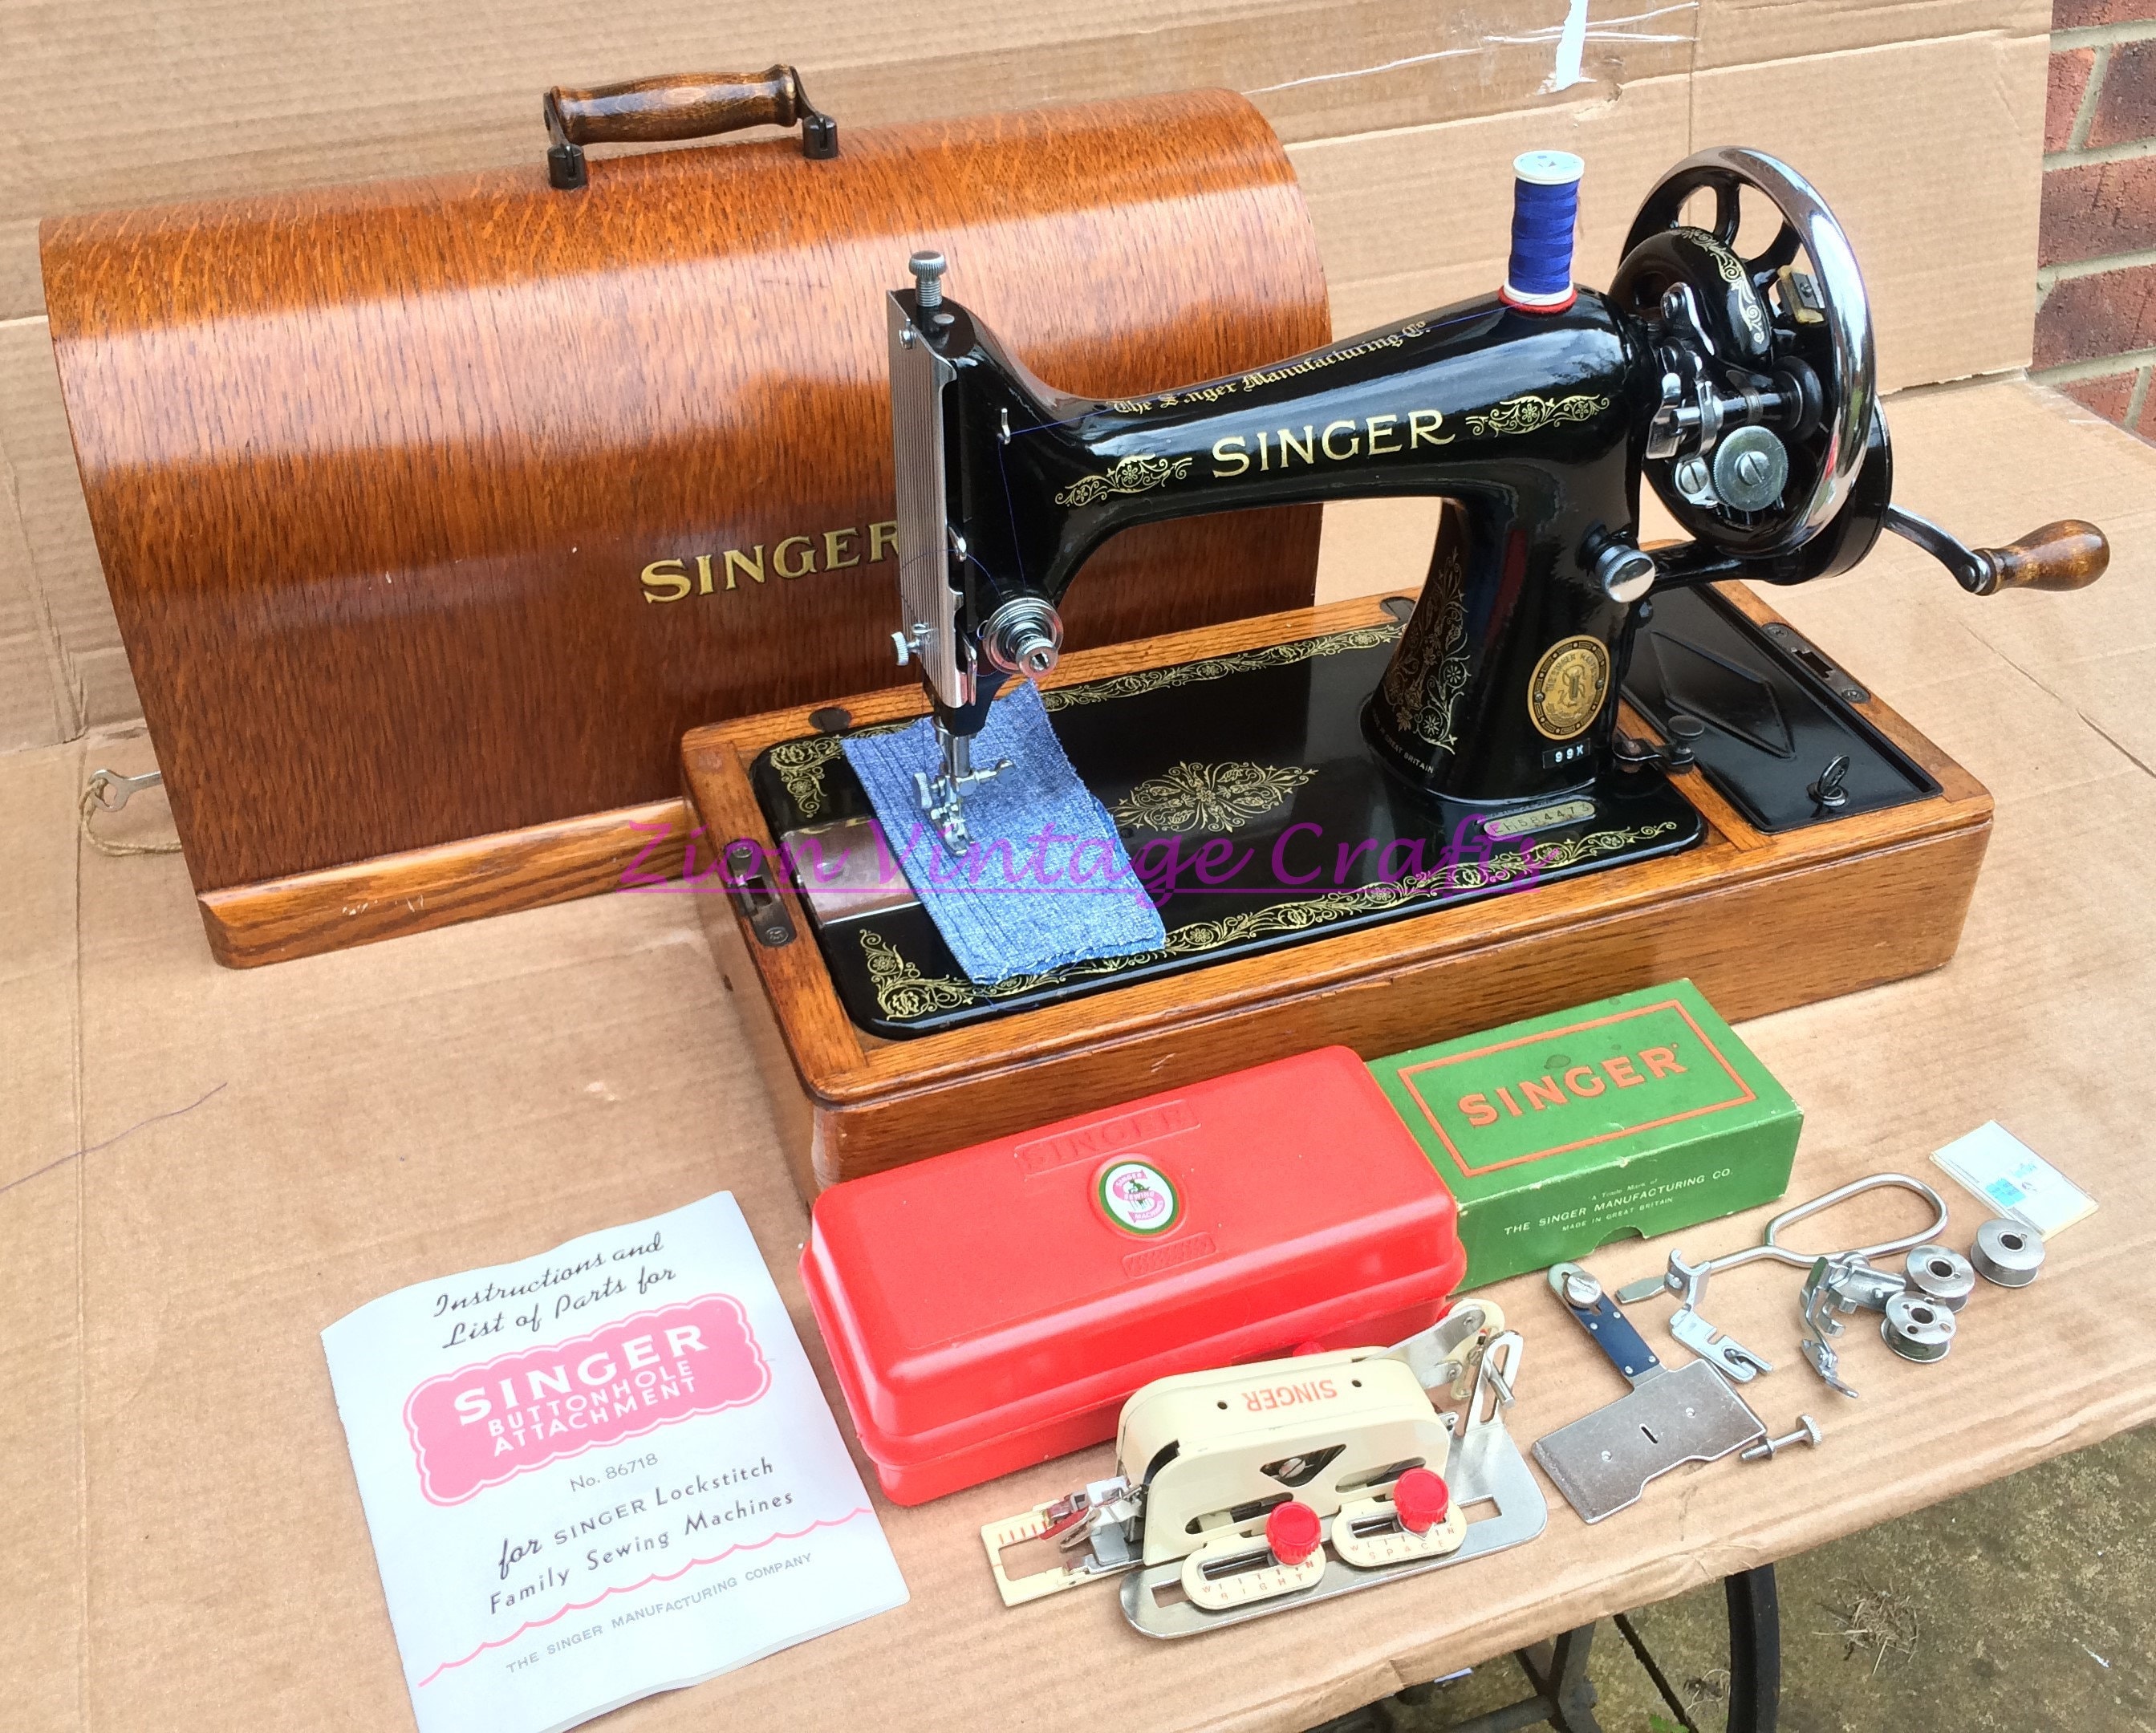 Antique Boye Sewing Machine Needles Wooden Tube No. 2 30-80